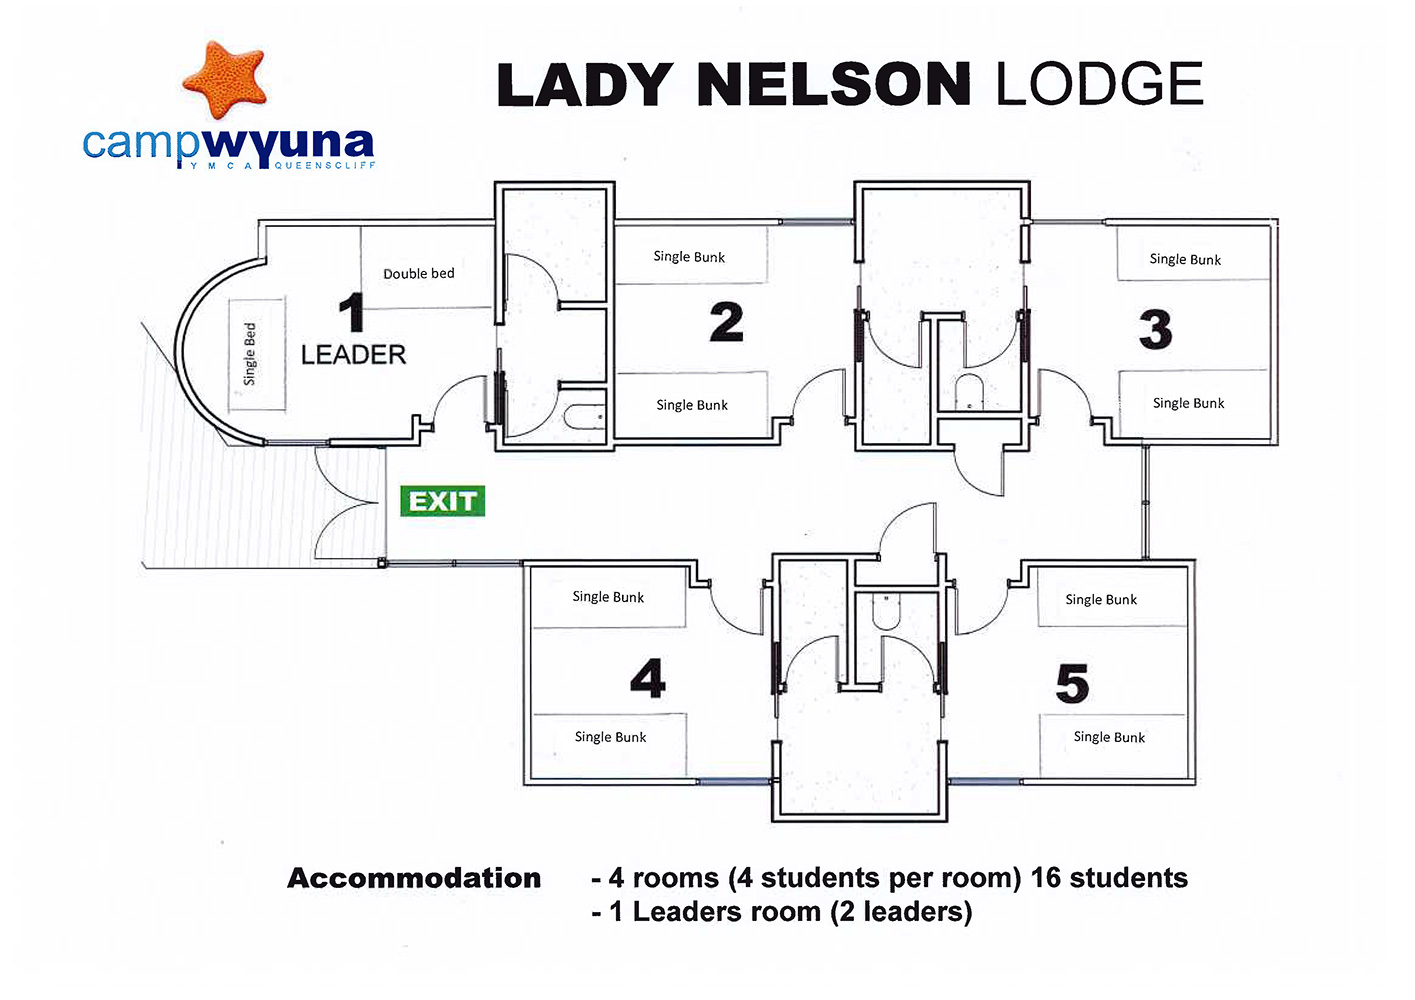 Lady Nelson Lodge